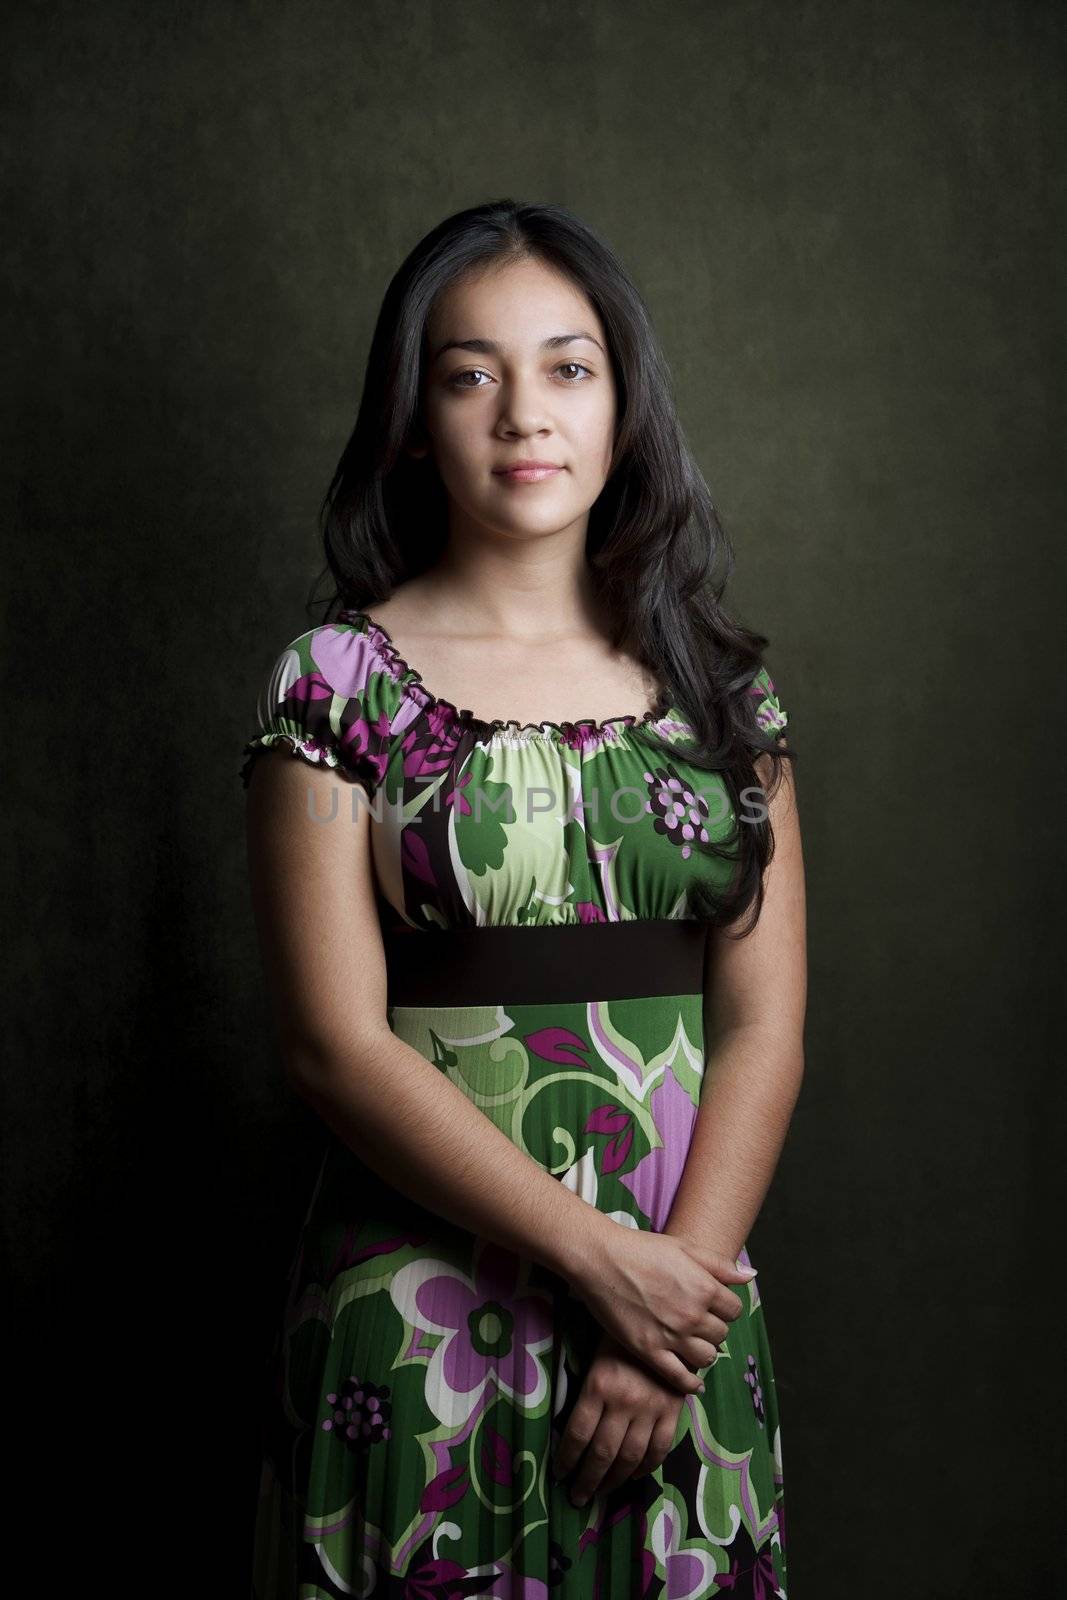 Portrait of pretty brunette Hispanic young woman